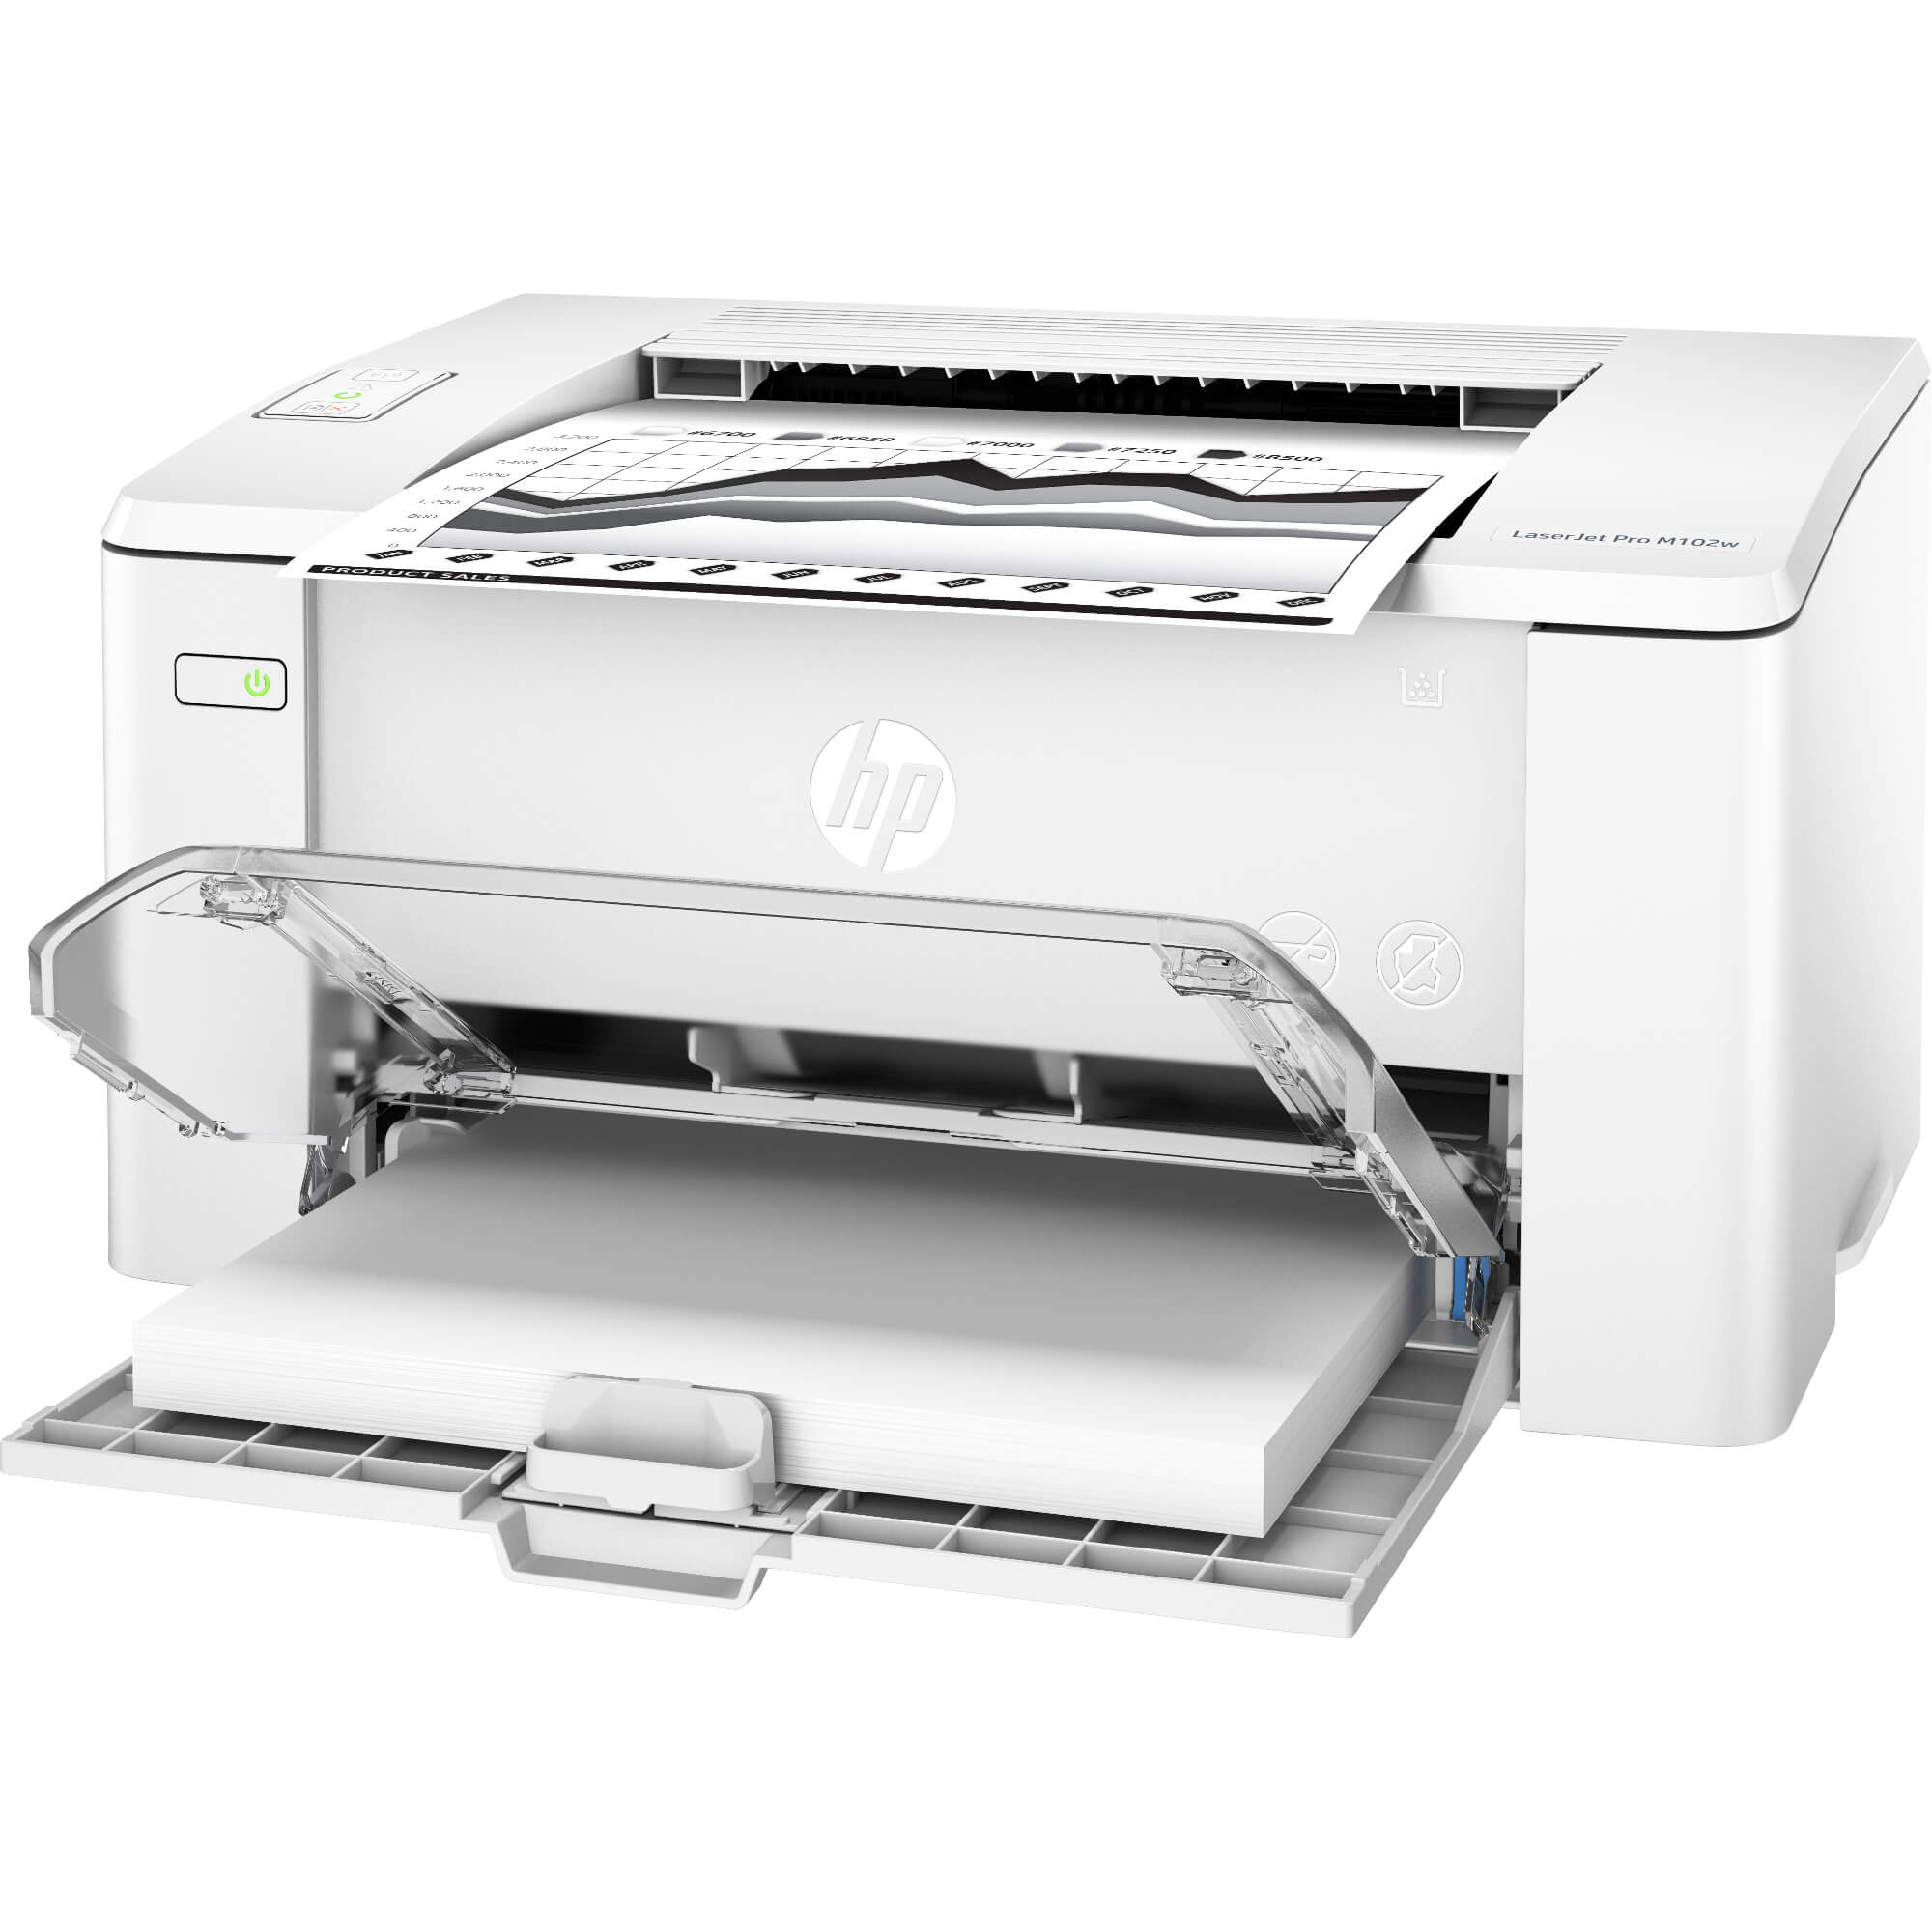  Imprimanta laser monocrom HP LaserJet Pro M102w, A4 